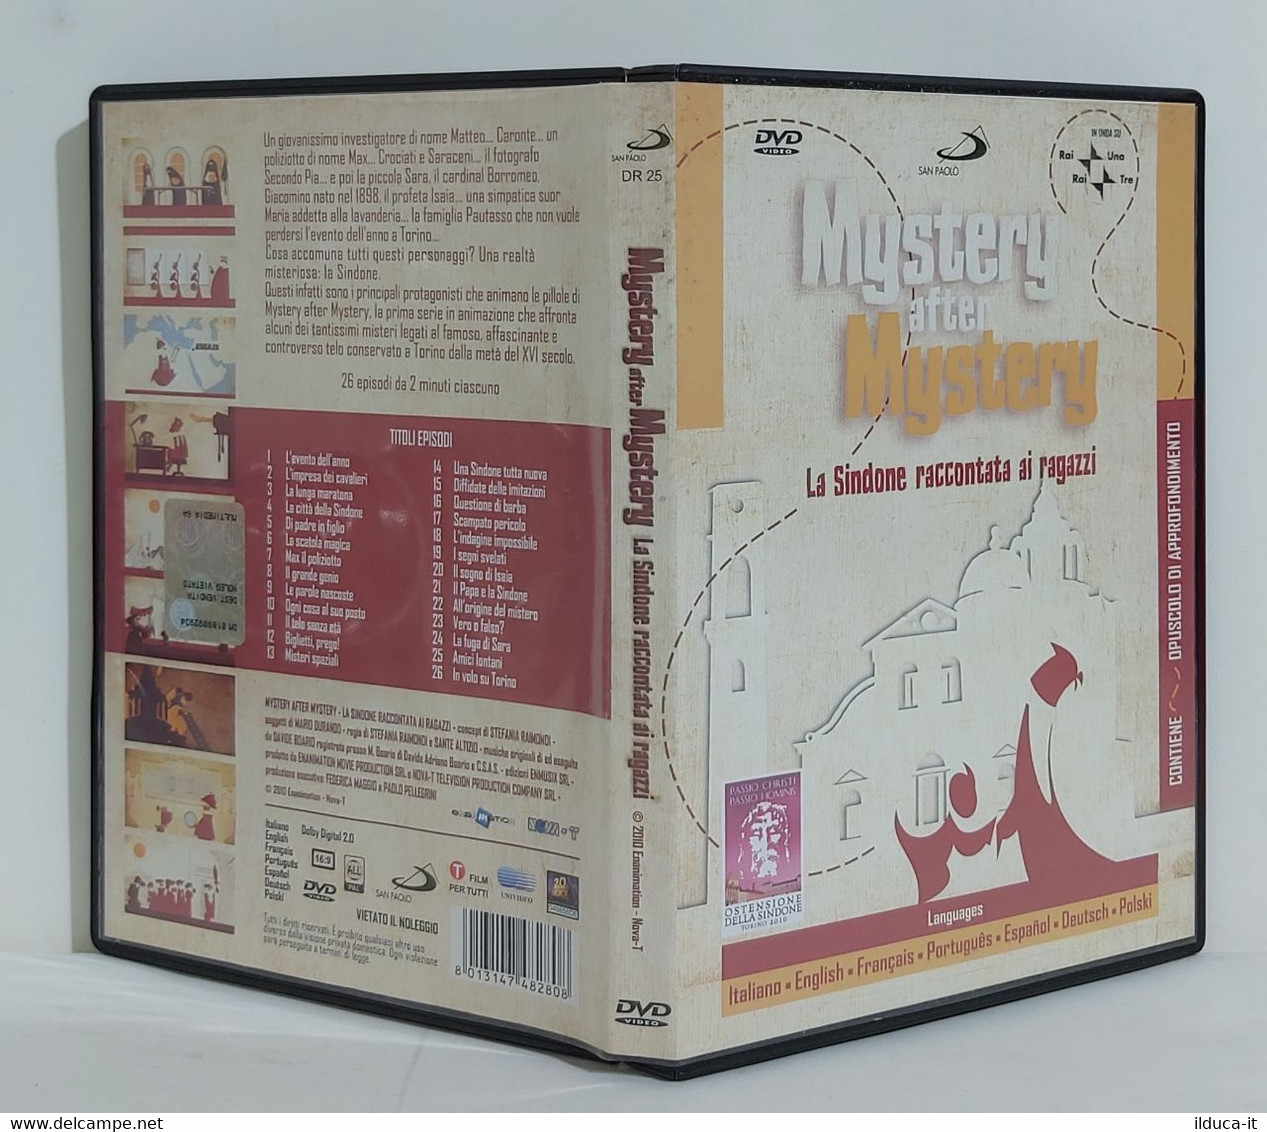 I101828 DVD - Mystery After Mystery - La Sindone Raccontata Ai Ragazzi - Documentari